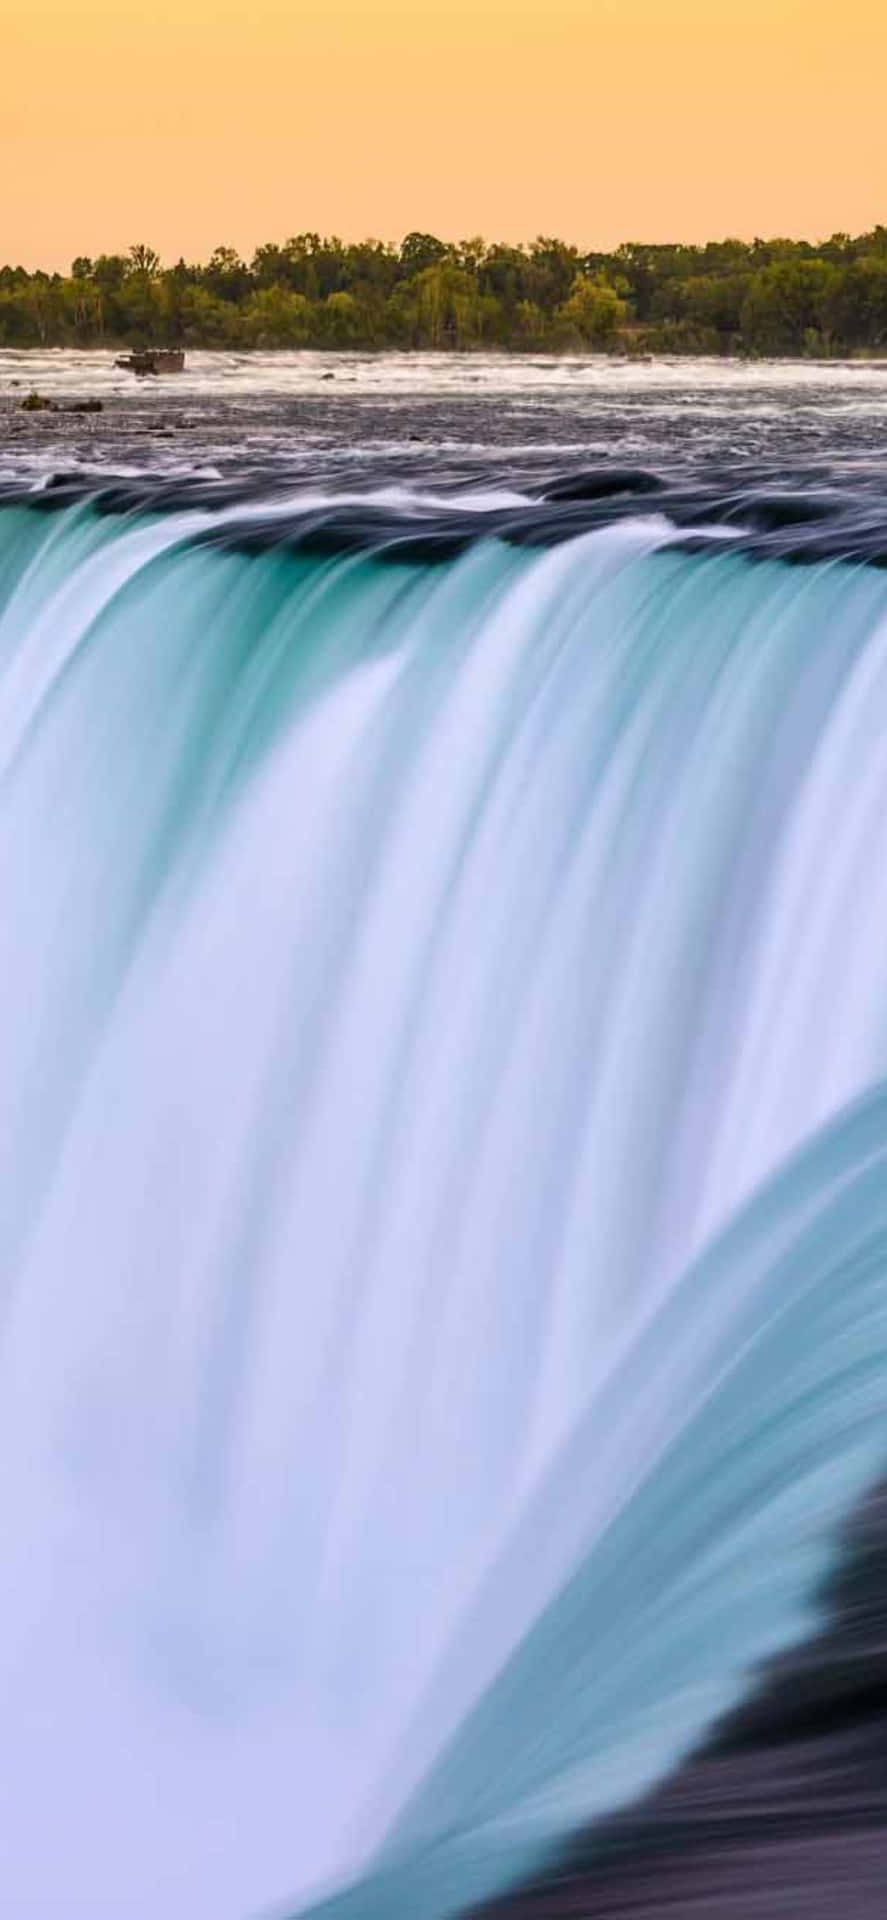 iPhone X Niagara Falls Ontario Canada Background